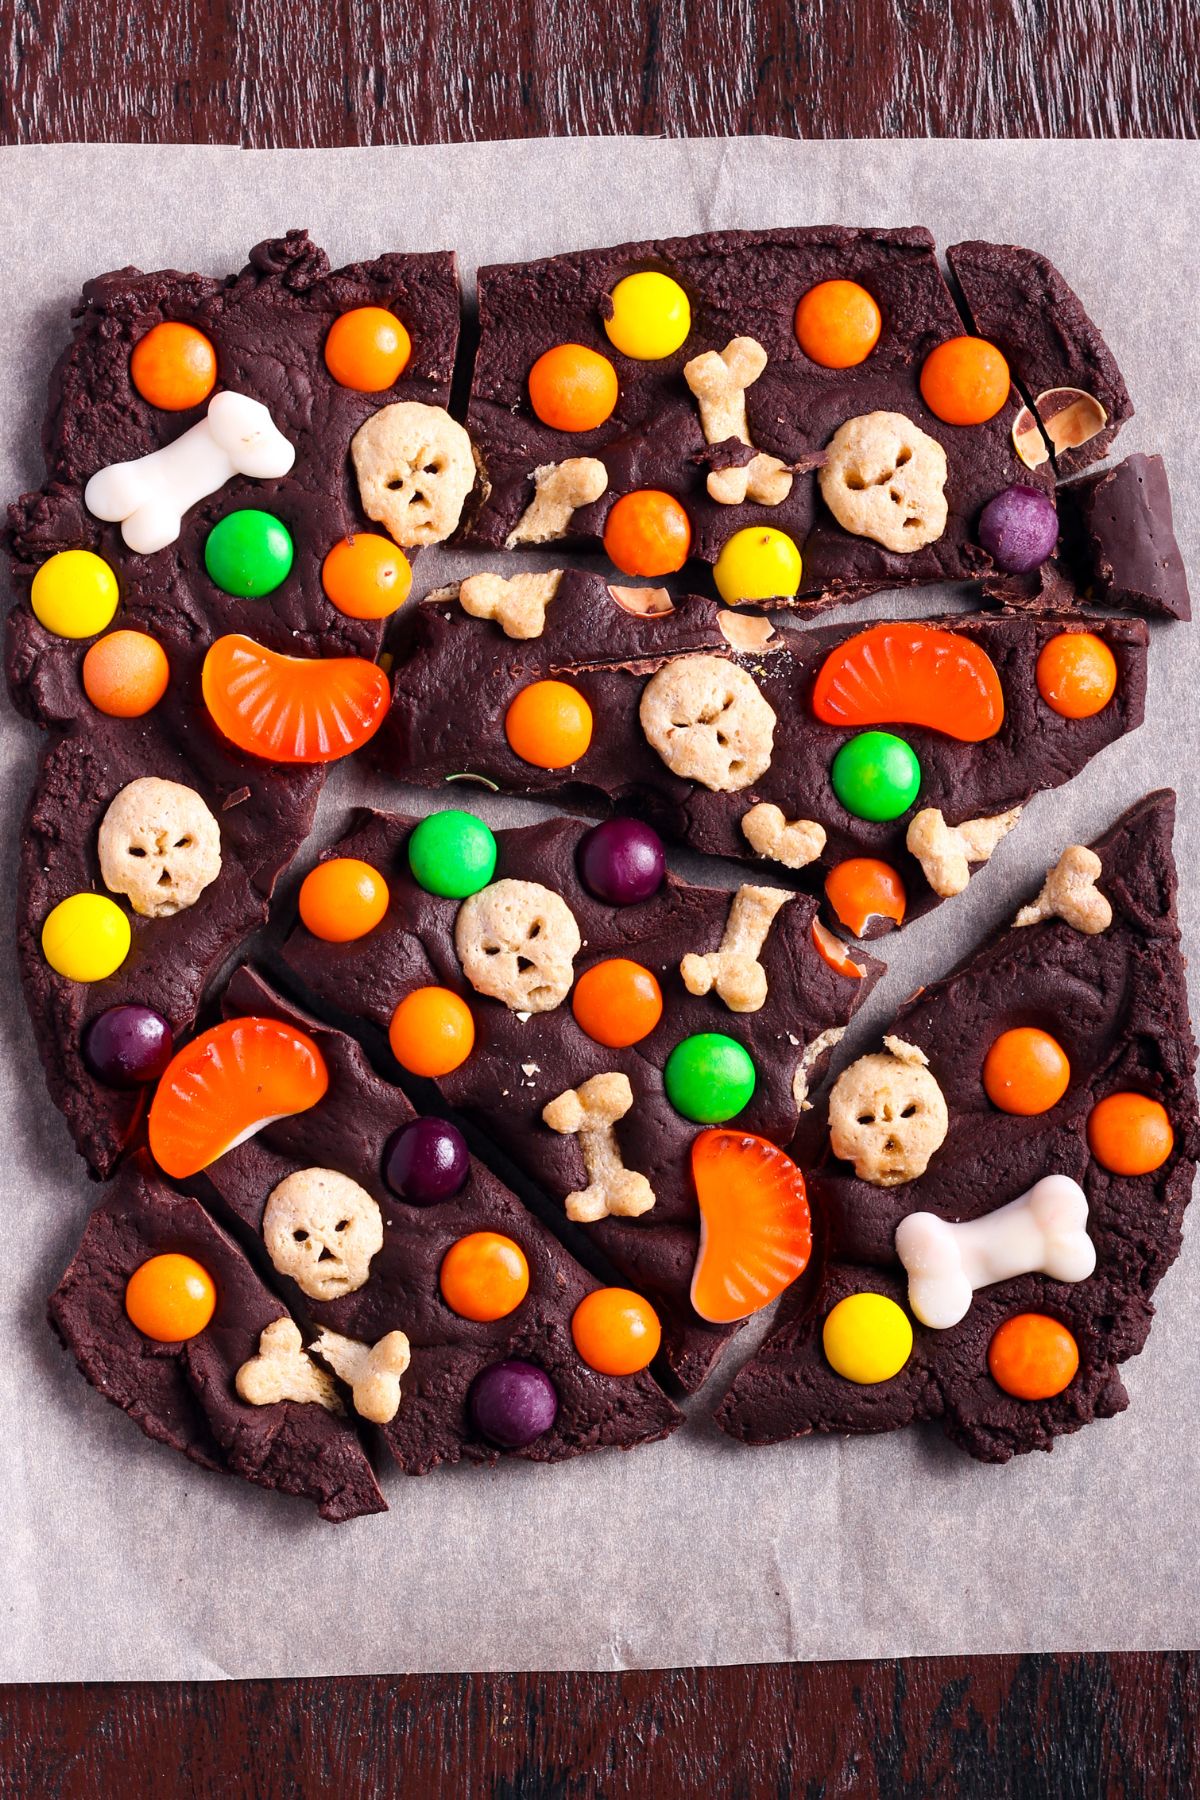 Halloween chocolate bark with assorted candies including bones and skulls.